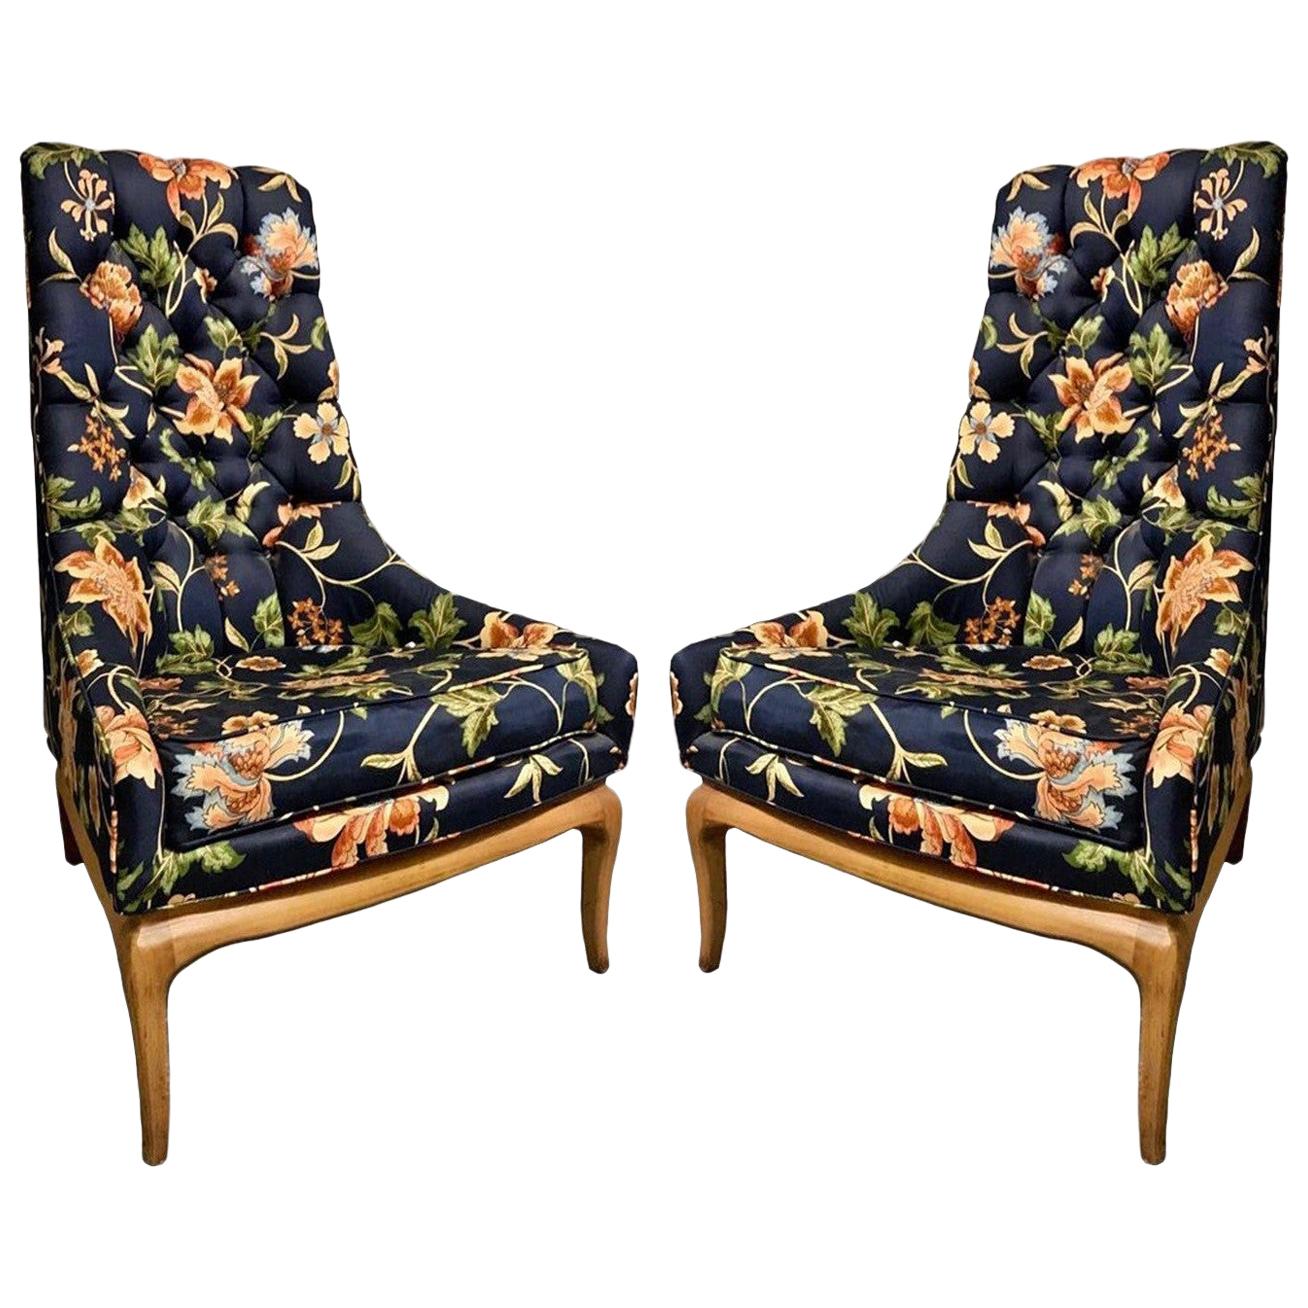 Pair of T.H. Robsjohn-Gibbings Tufted High Back Chairs for Widdicomb